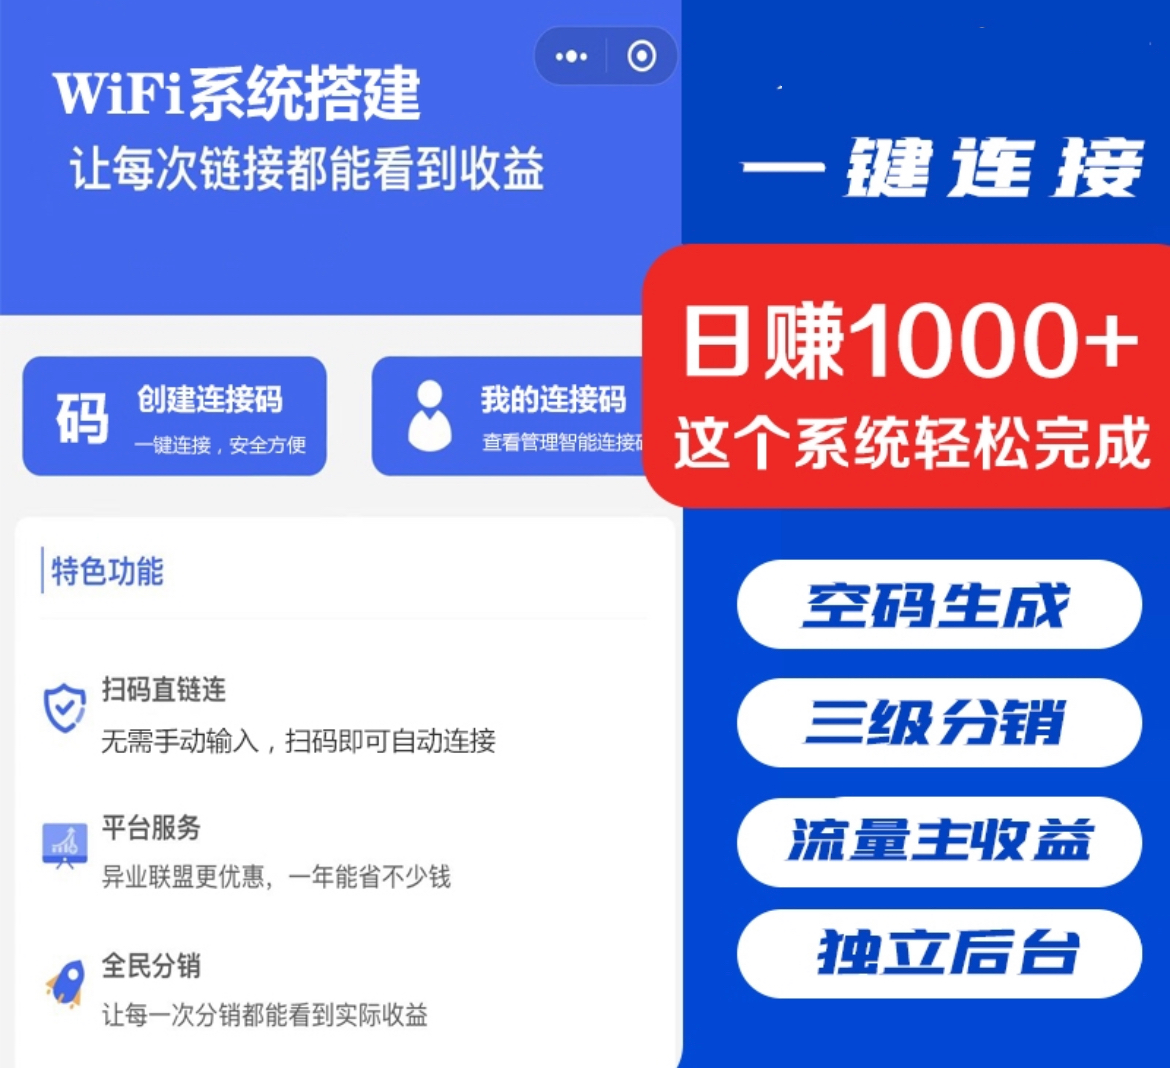 WiFi营销小程序共享WiFi门店一键免密码连接WiFi流量主分销小程序-创网